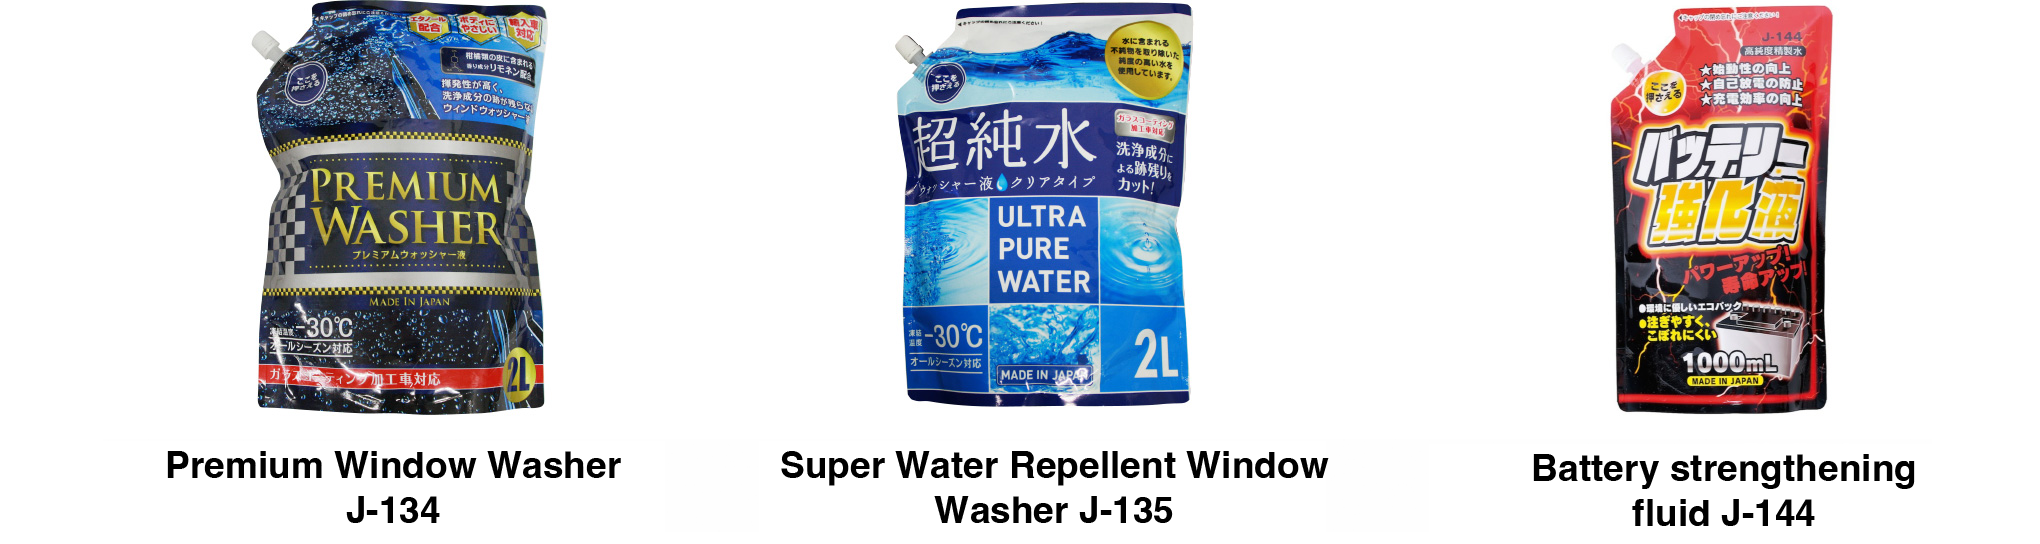 Premium Window Washer J-134 Super Water Repellent Window Washer J-135 Battery strengthening fluid J-144